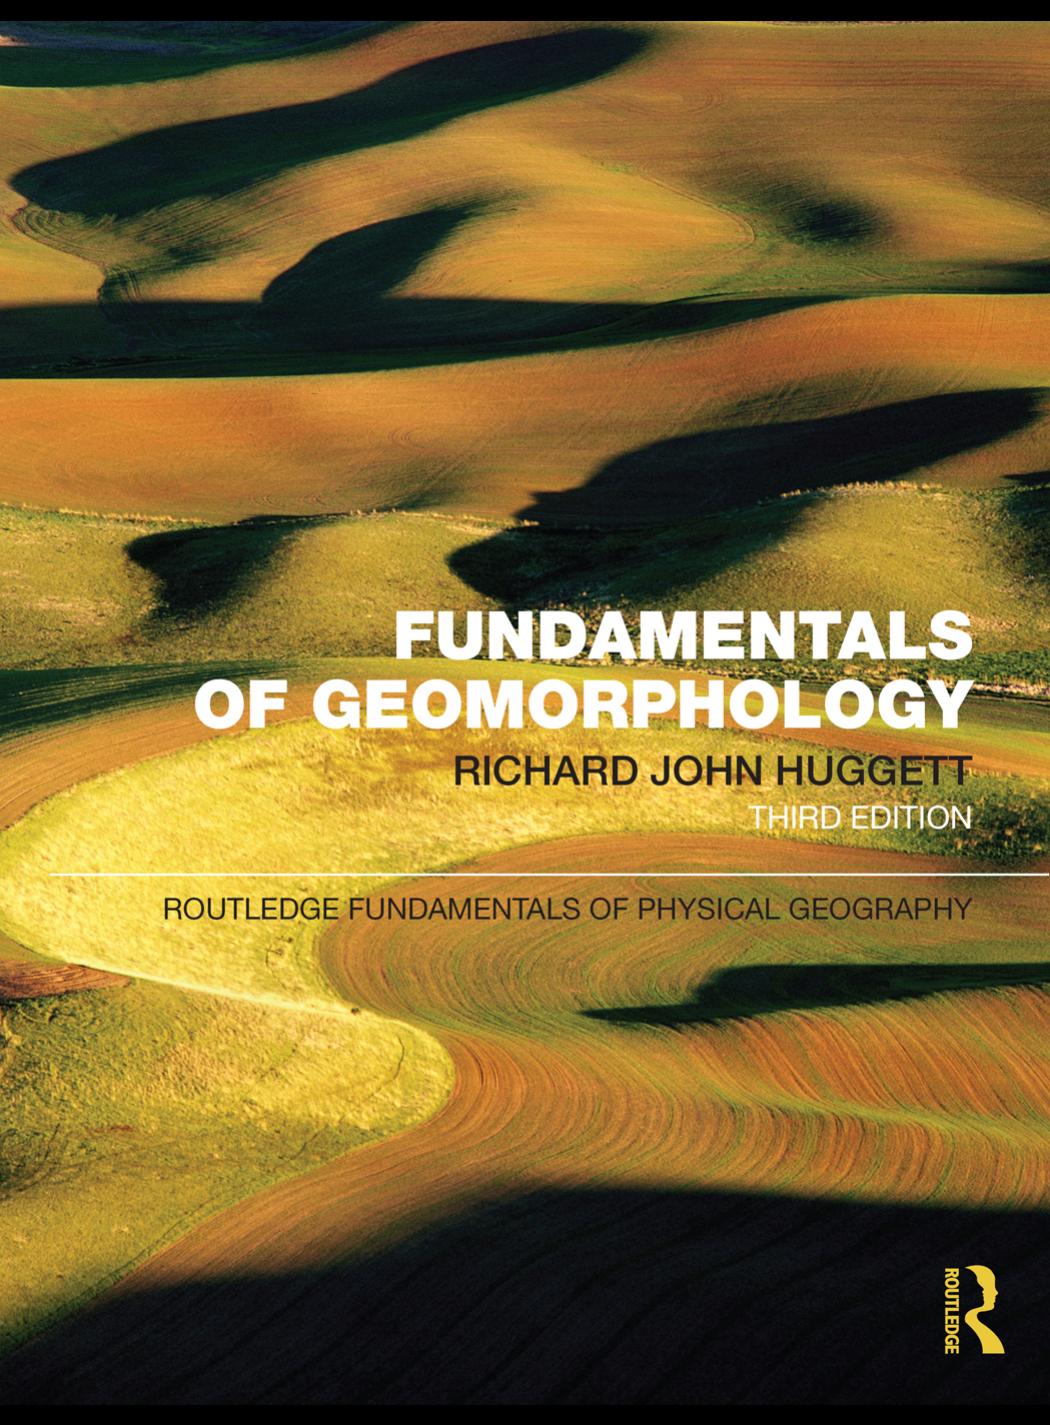 Fundamentals of Geomorphology, Third Edition